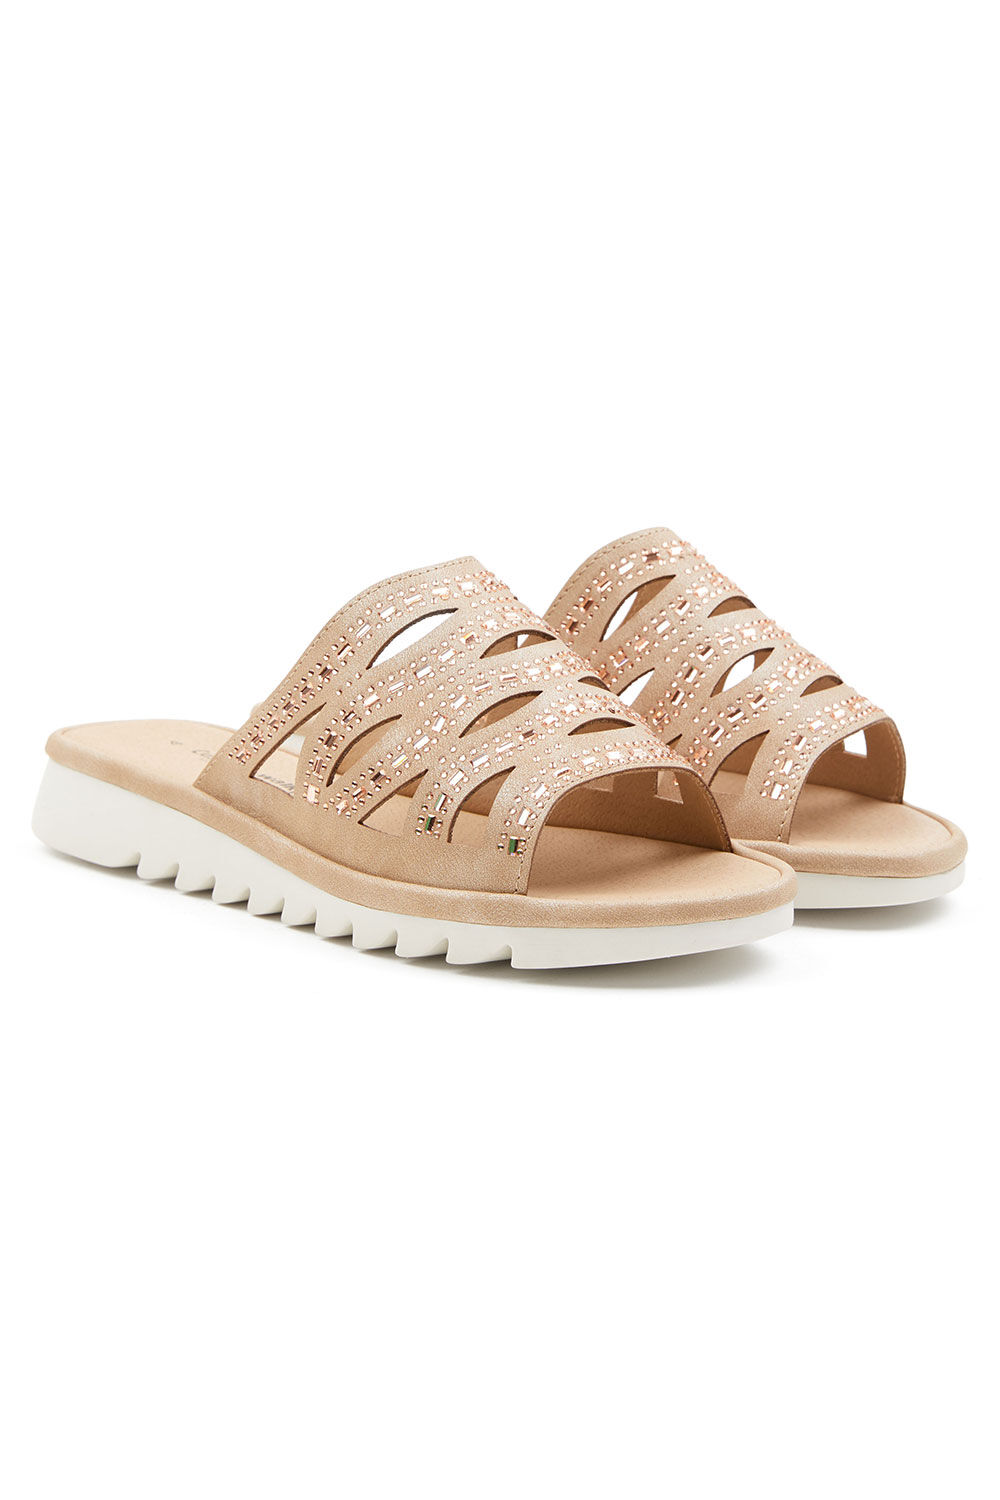 Bonmarche Tan Cut Out Weave Sandals With Diamante Detail (eee Fit), Size: 4W (37)